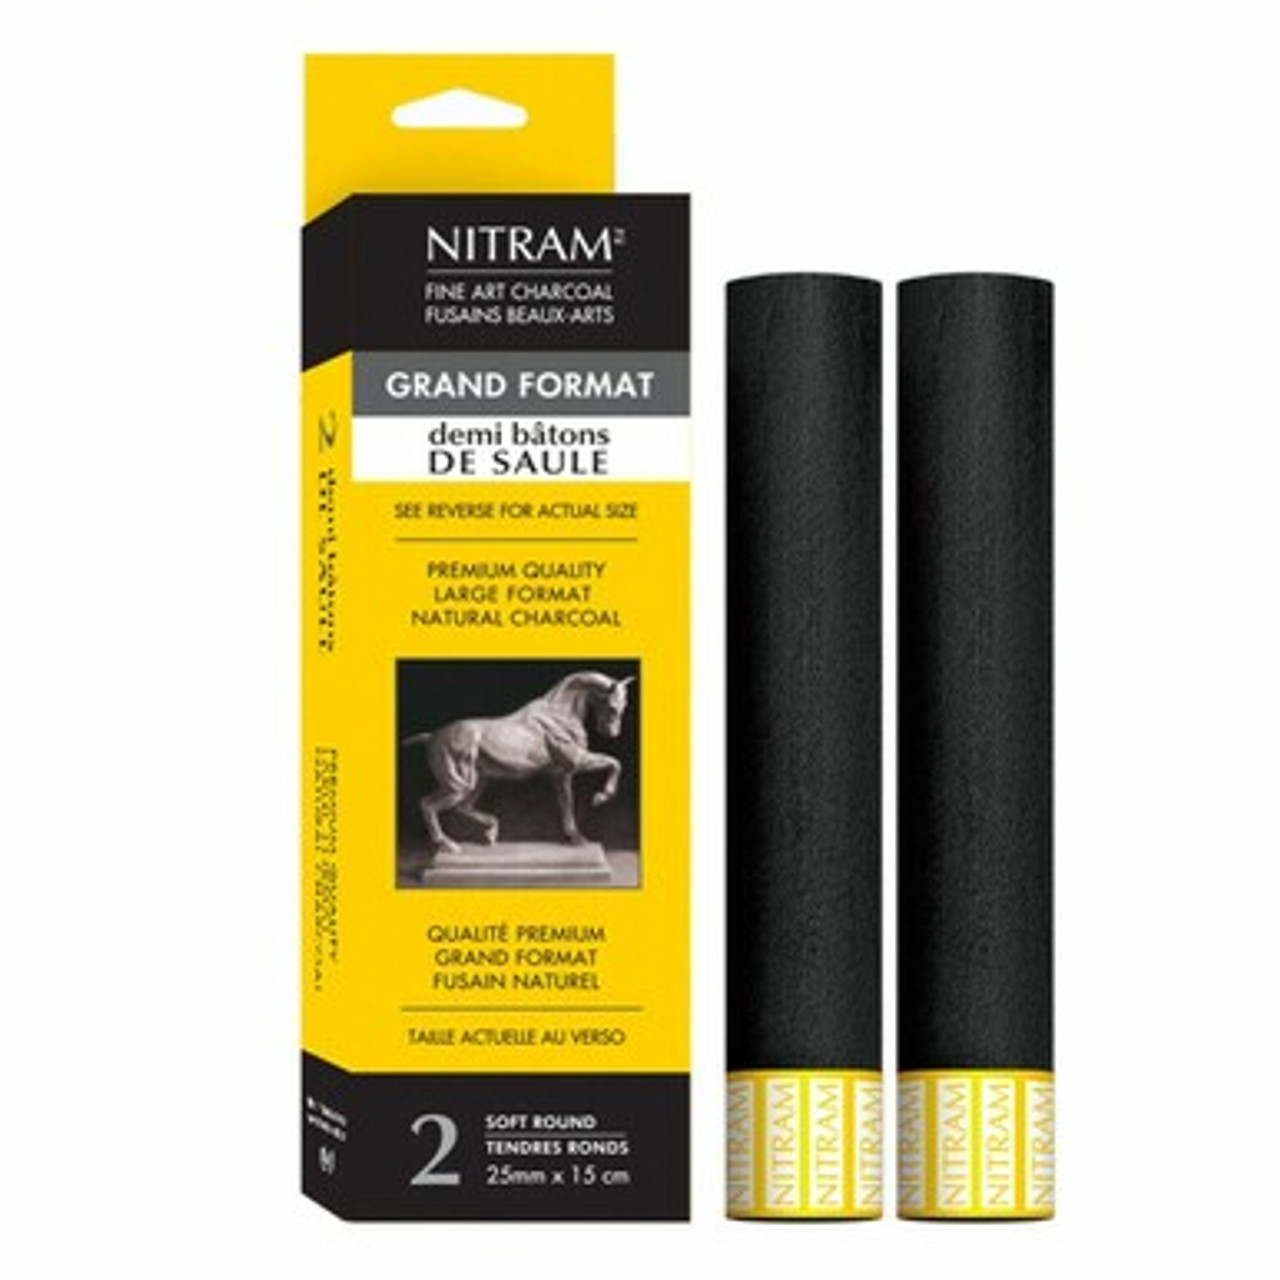 Nitram Charcoal-Demi baton de Saule